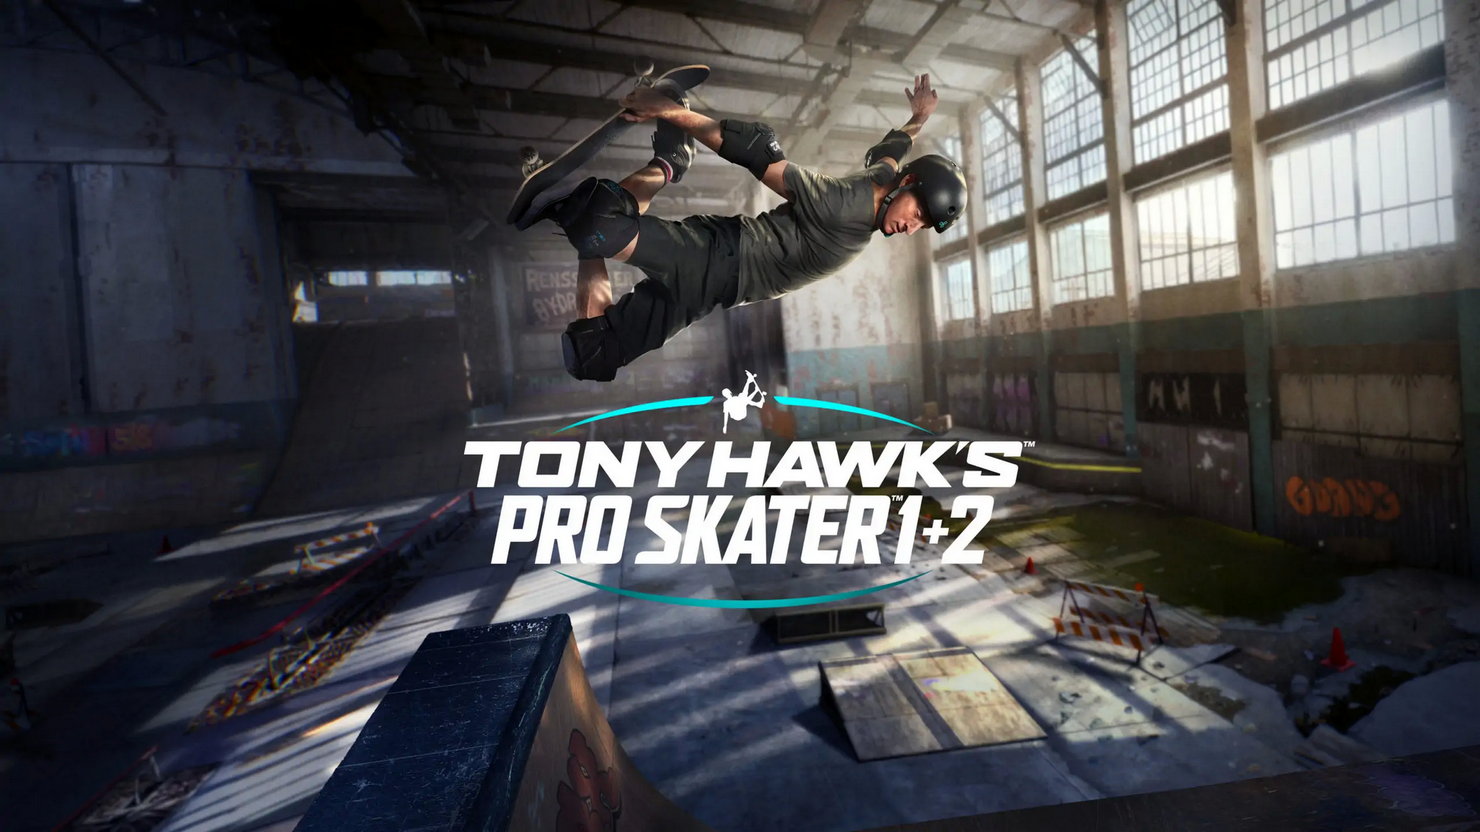 Tony hawk pro skater 1+2 bum locations